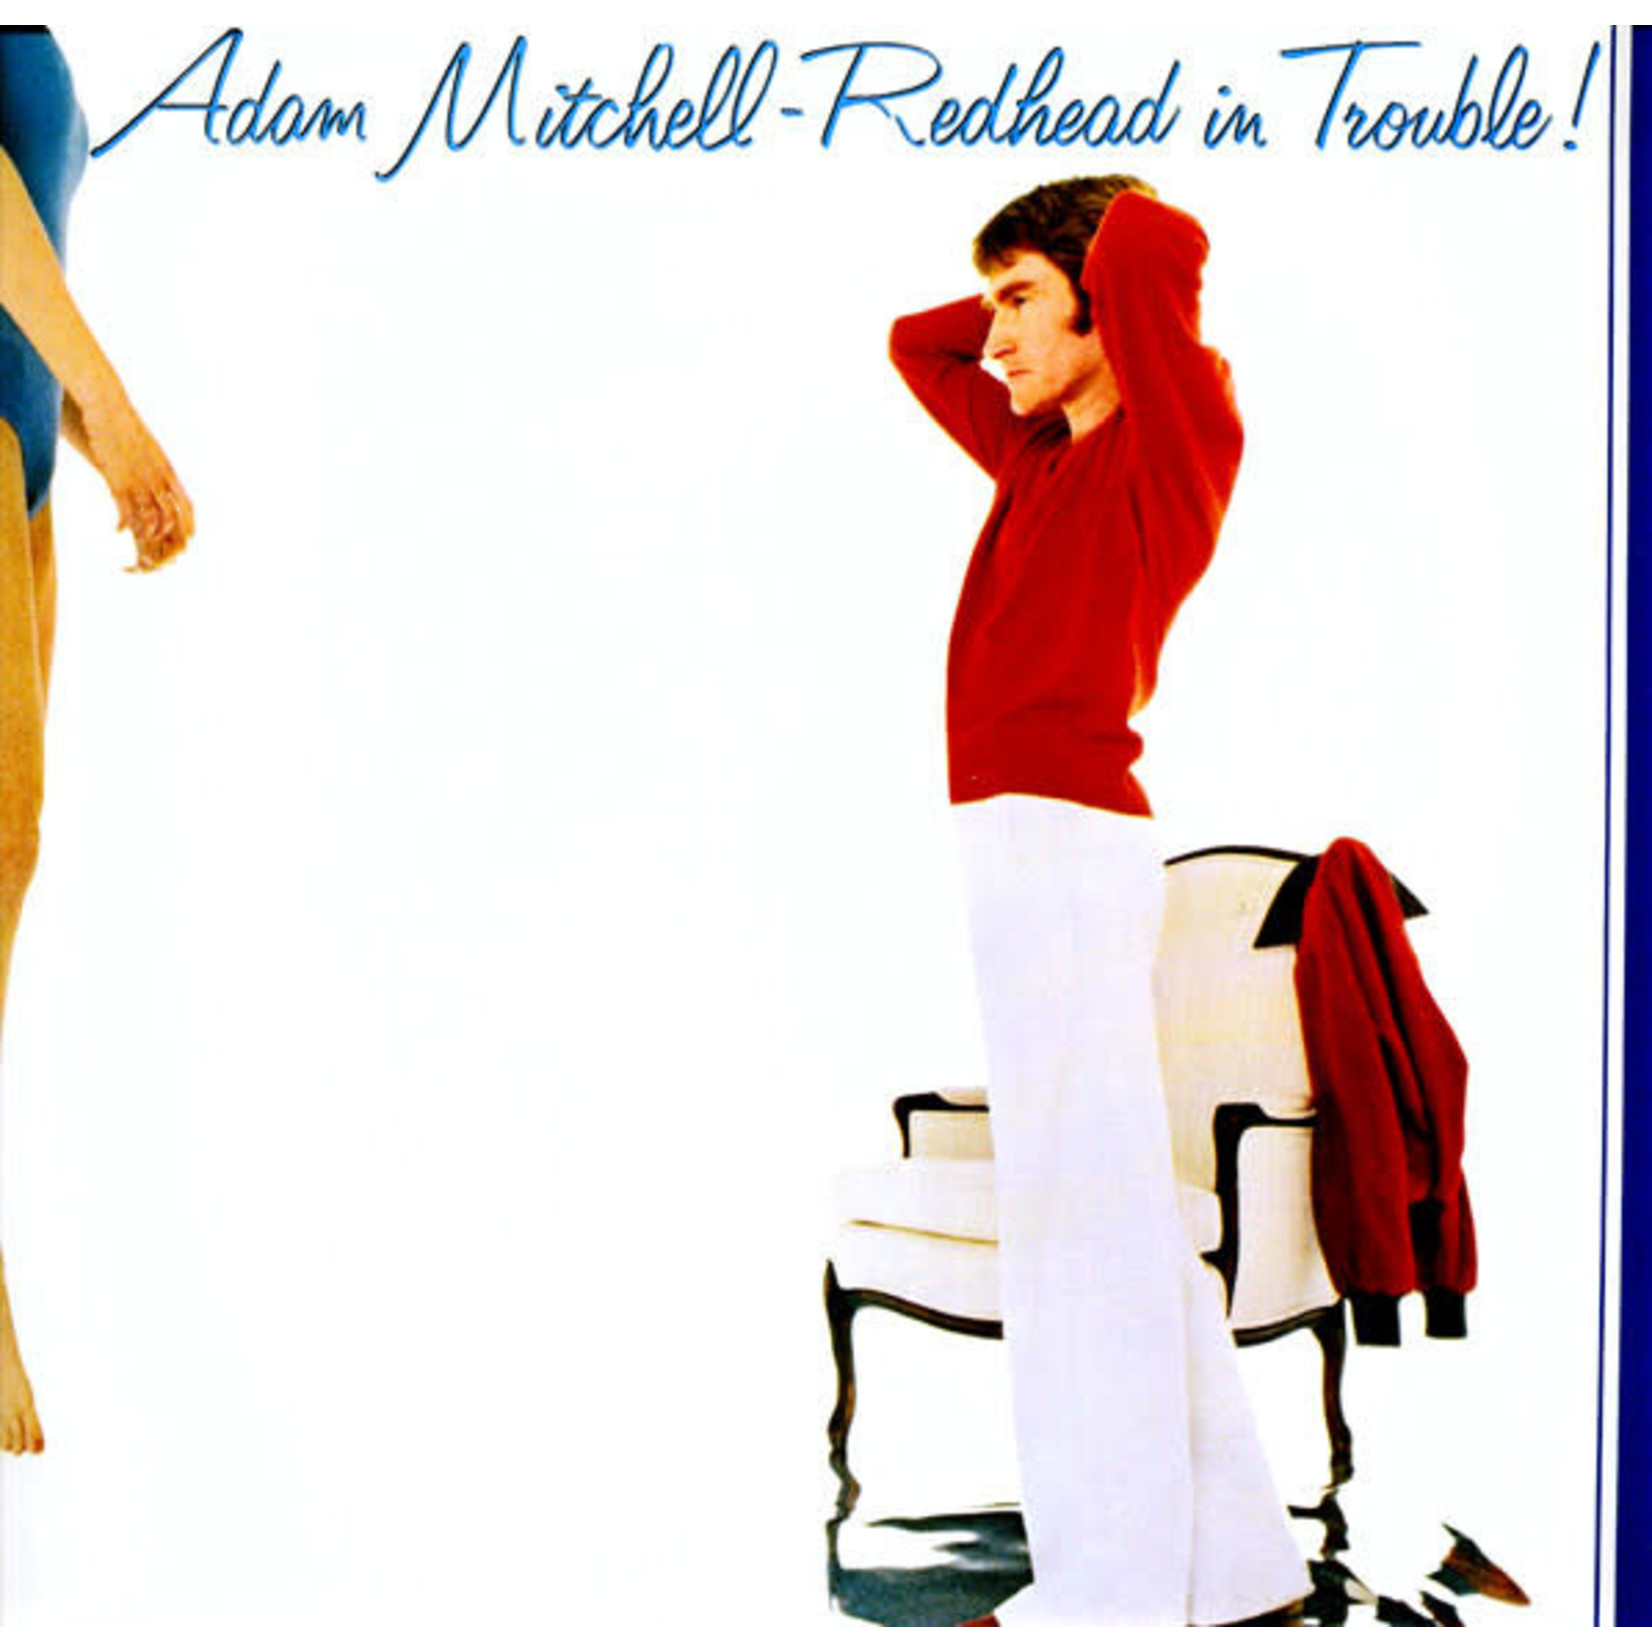 [Vintage] Adam Mitchell - Redhead in Trouble!